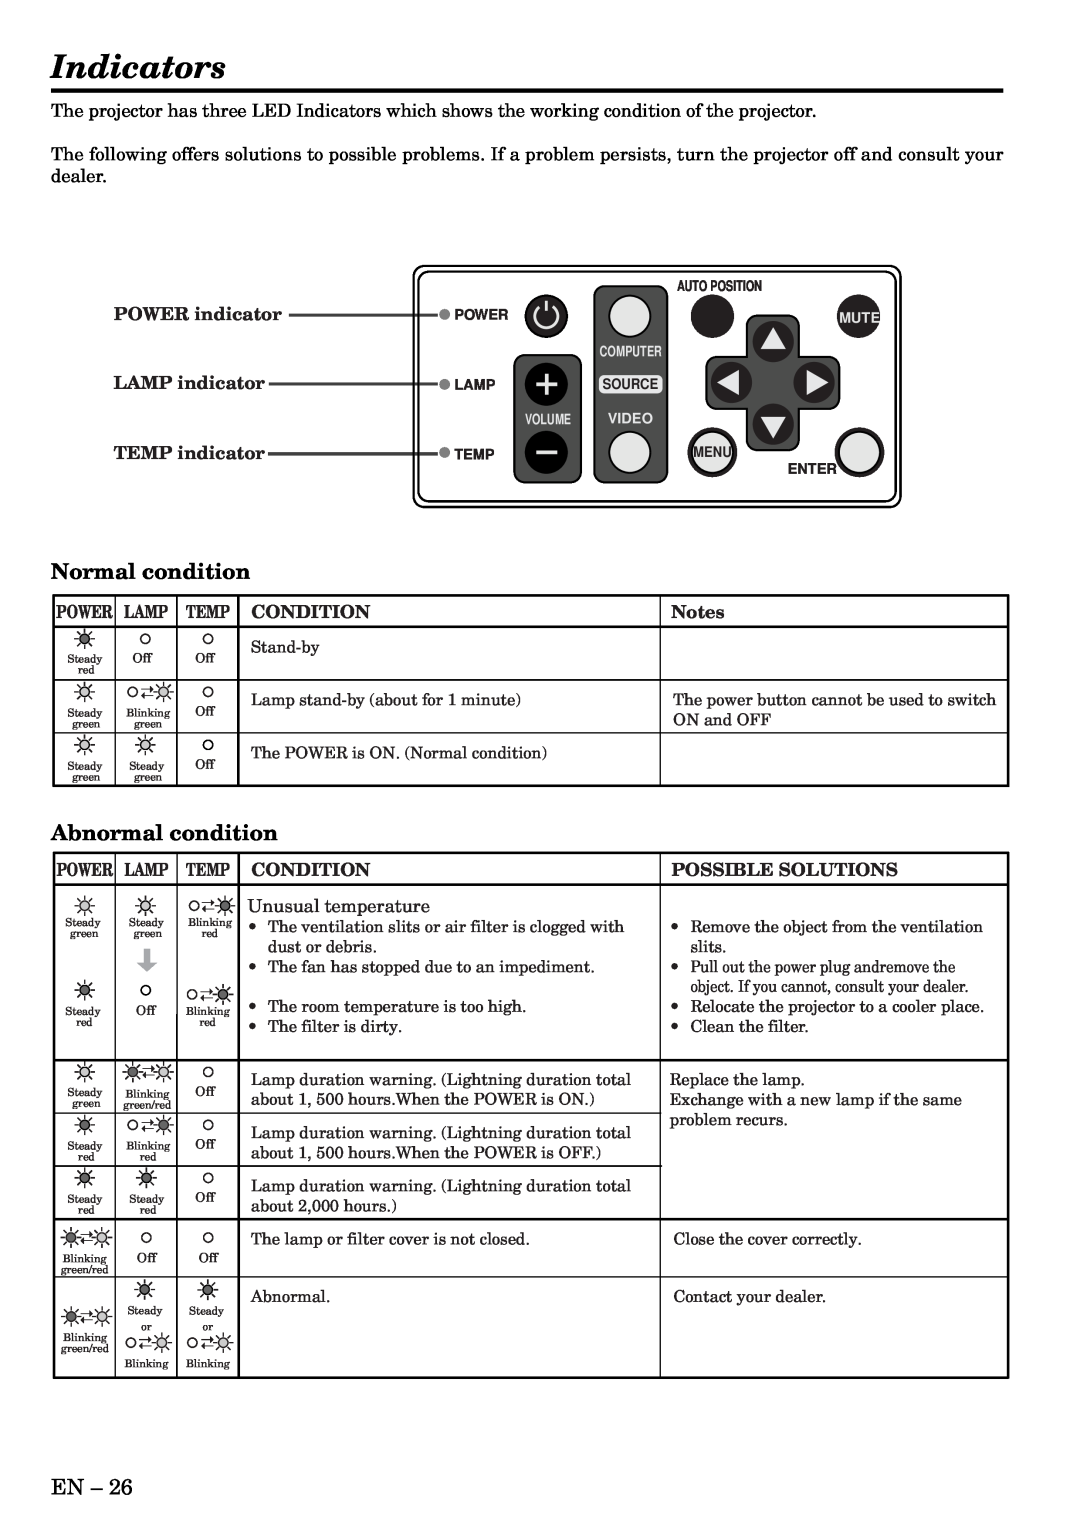 Mitsubishi Electronics X50, X70 user manual Indicators, Normal condition, Abnormal condition 